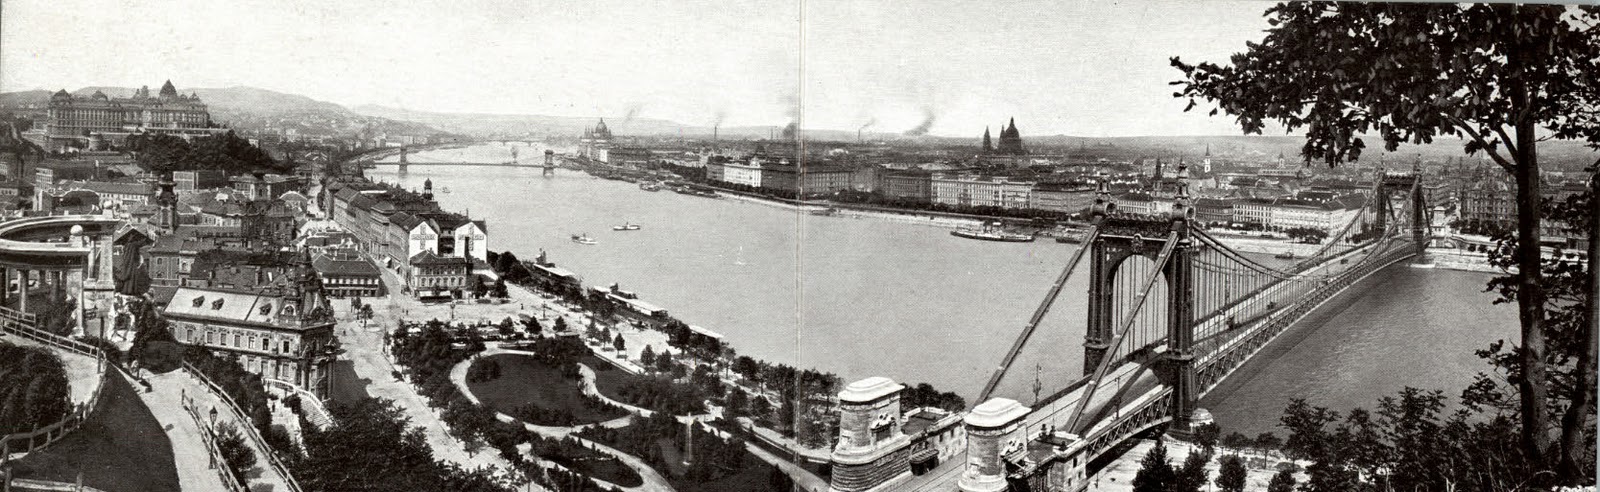 1910-budapest-panorama.jpg